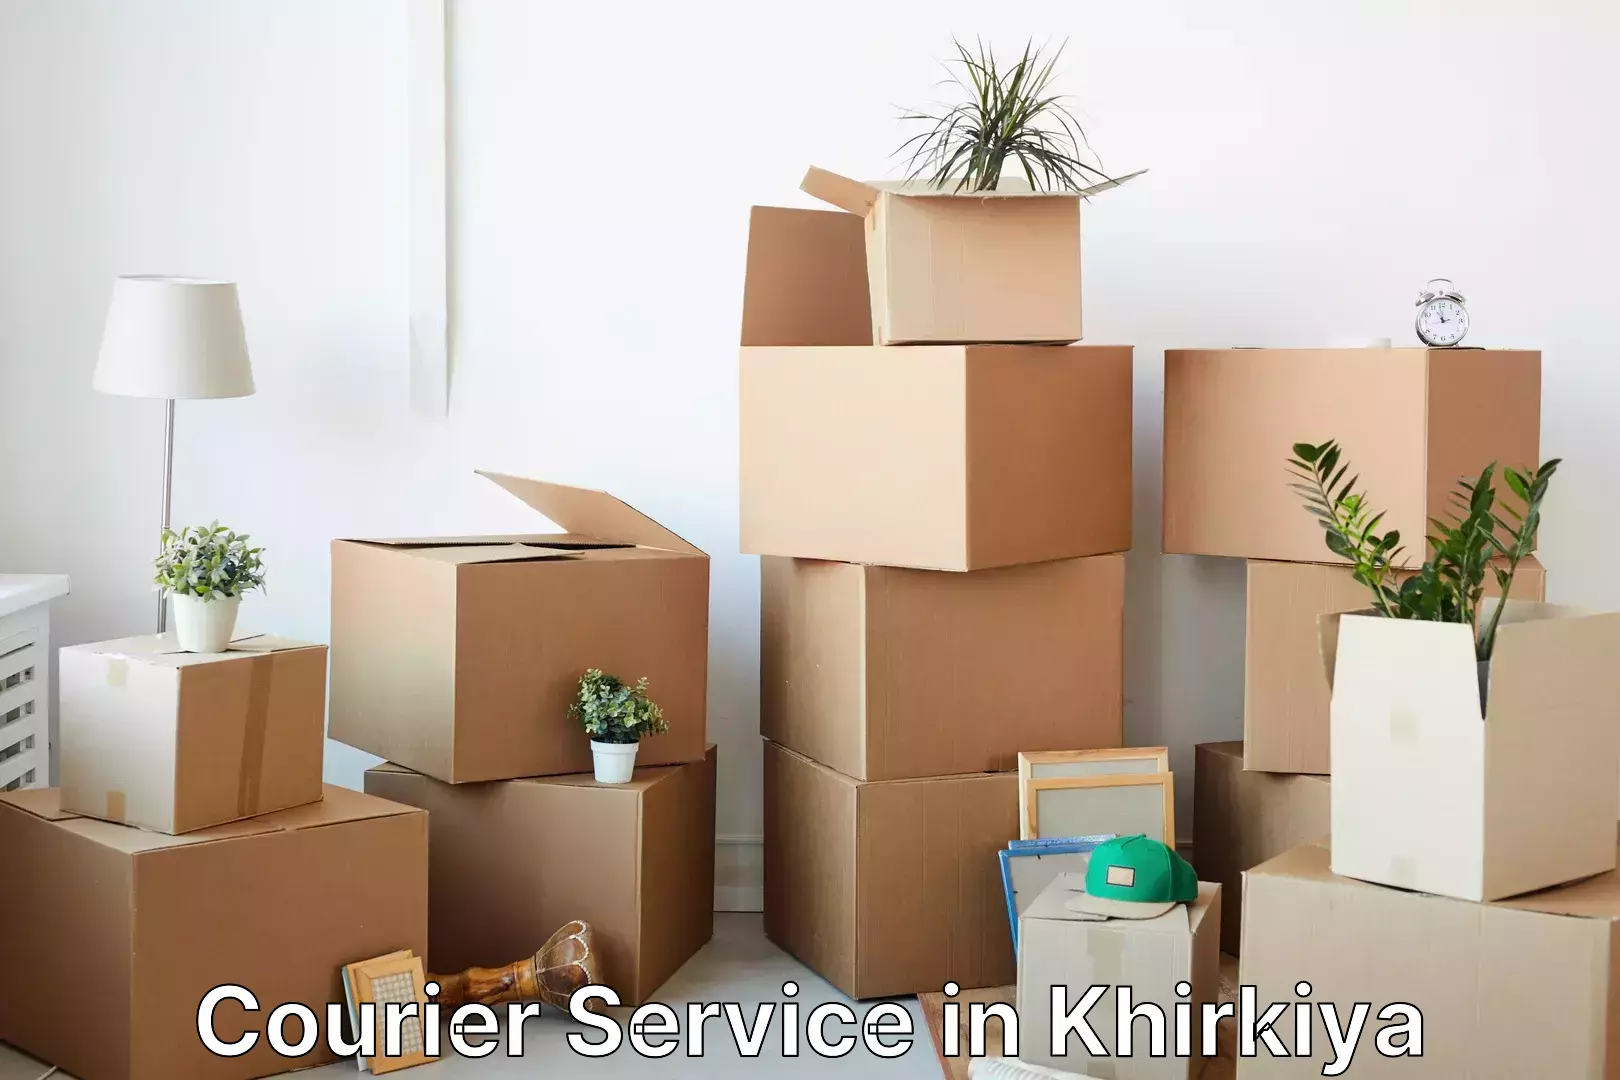 Express delivery capabilities in Khirkiya